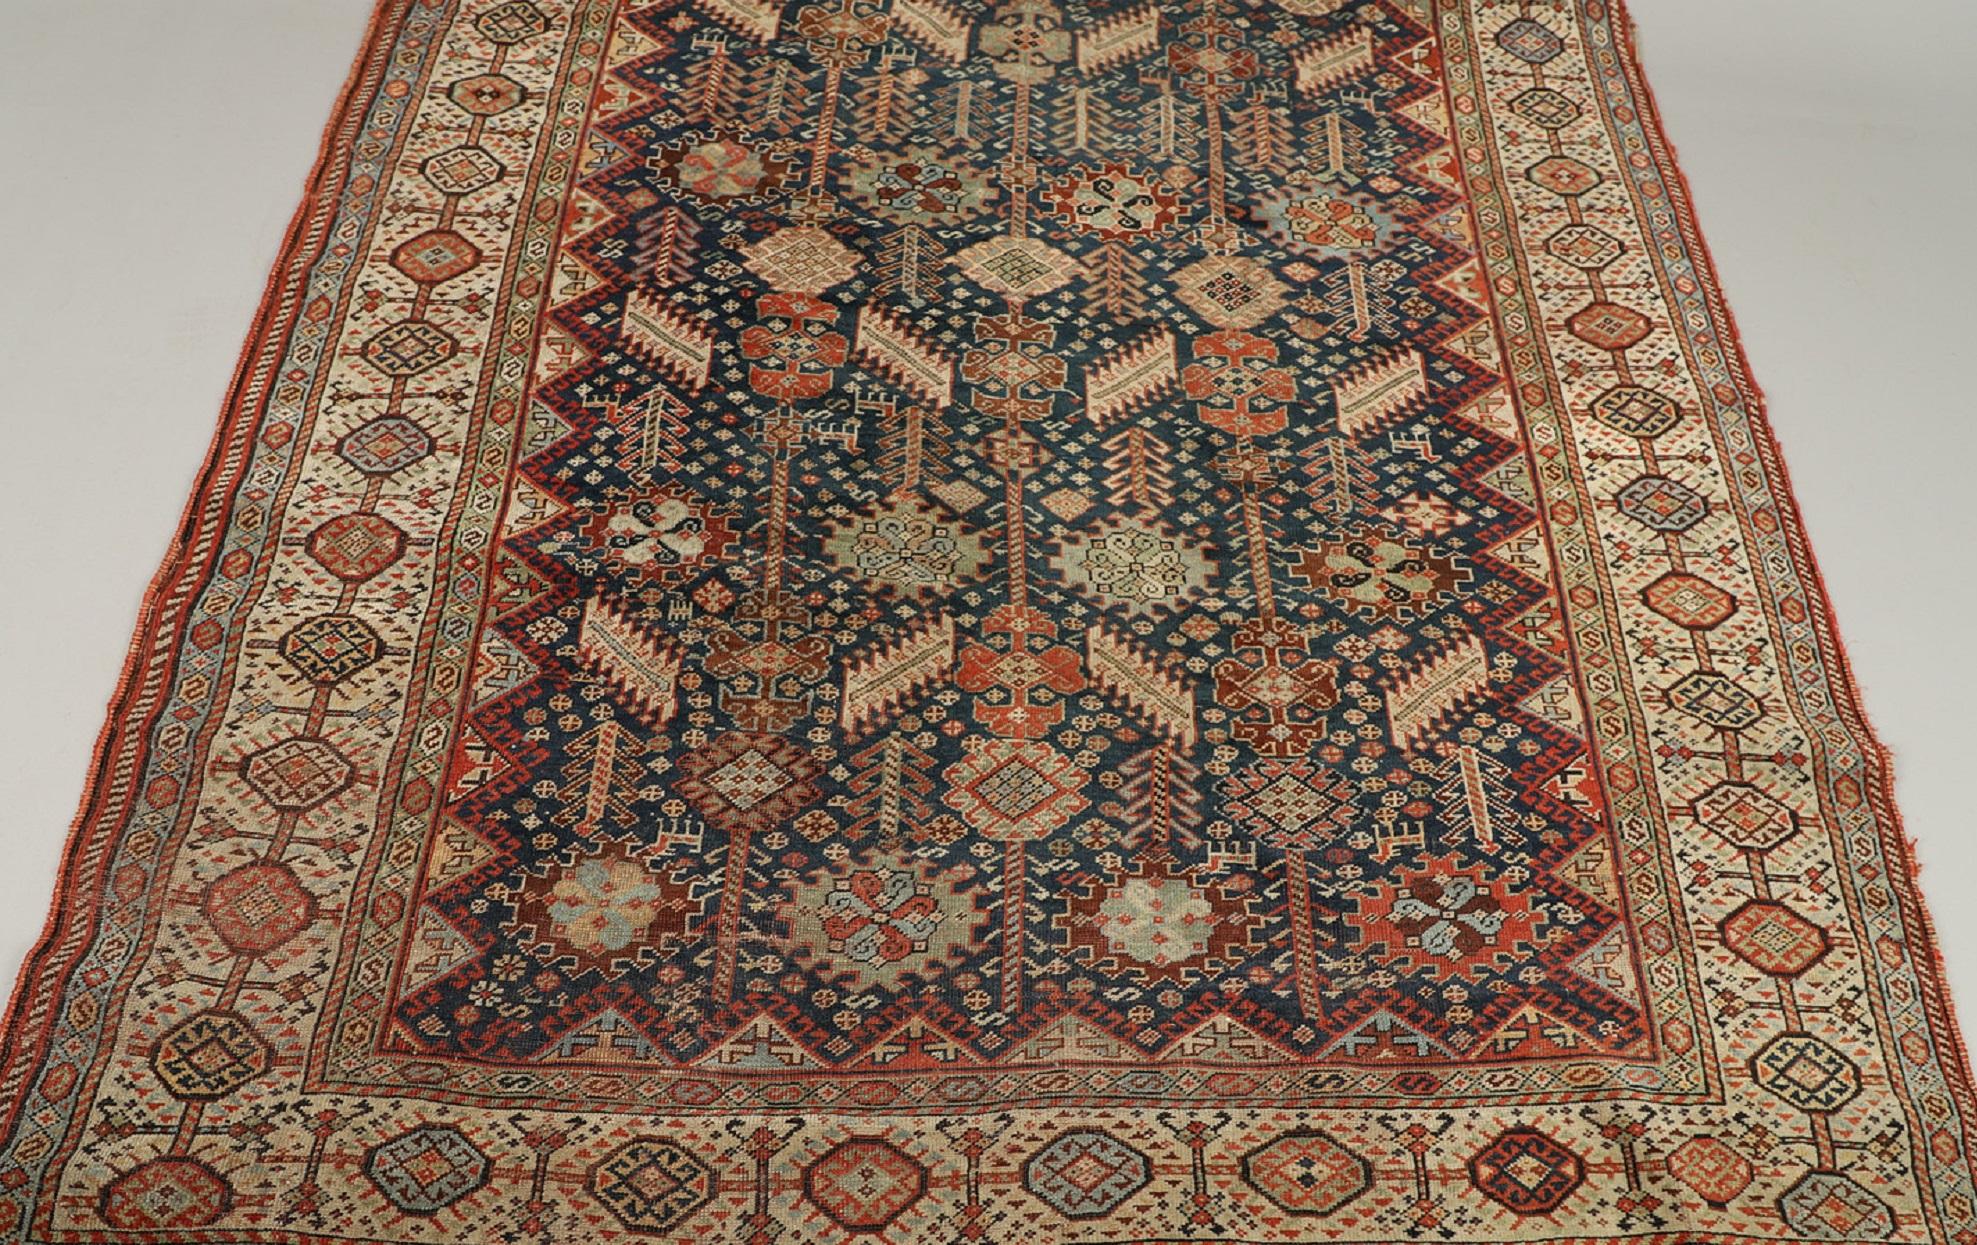 Tribal Tapis ancien, tapis artisanal du Caucase oriental, tapis de salon en vente en vente